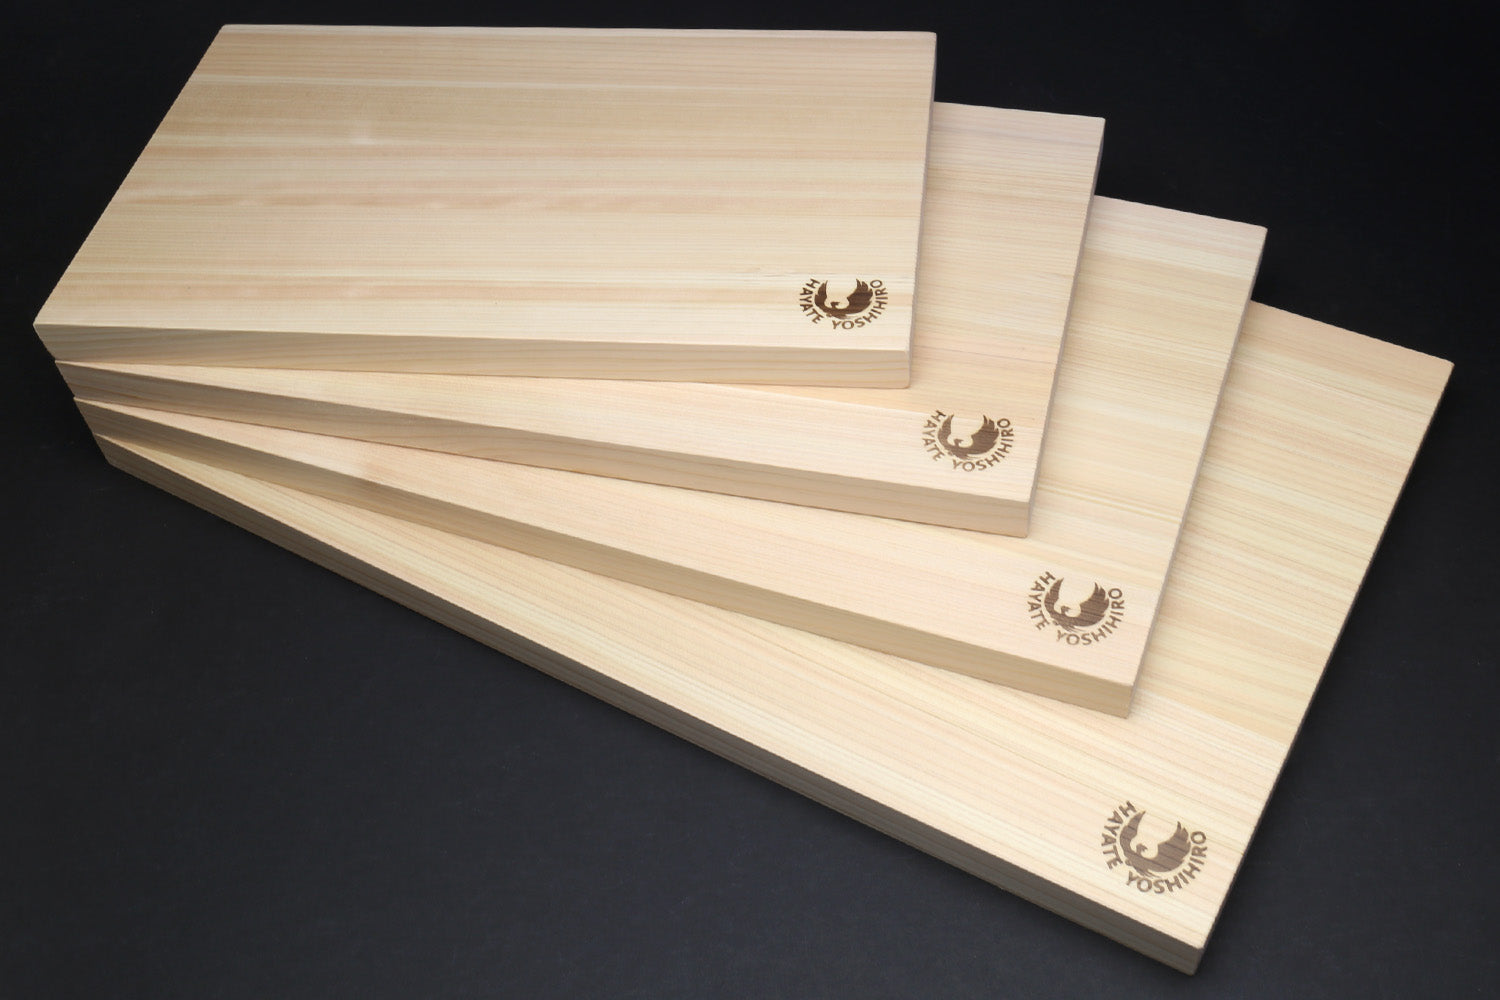 Kiso Hinoki Japanese Thick Wood Cutting Board Antibacterial